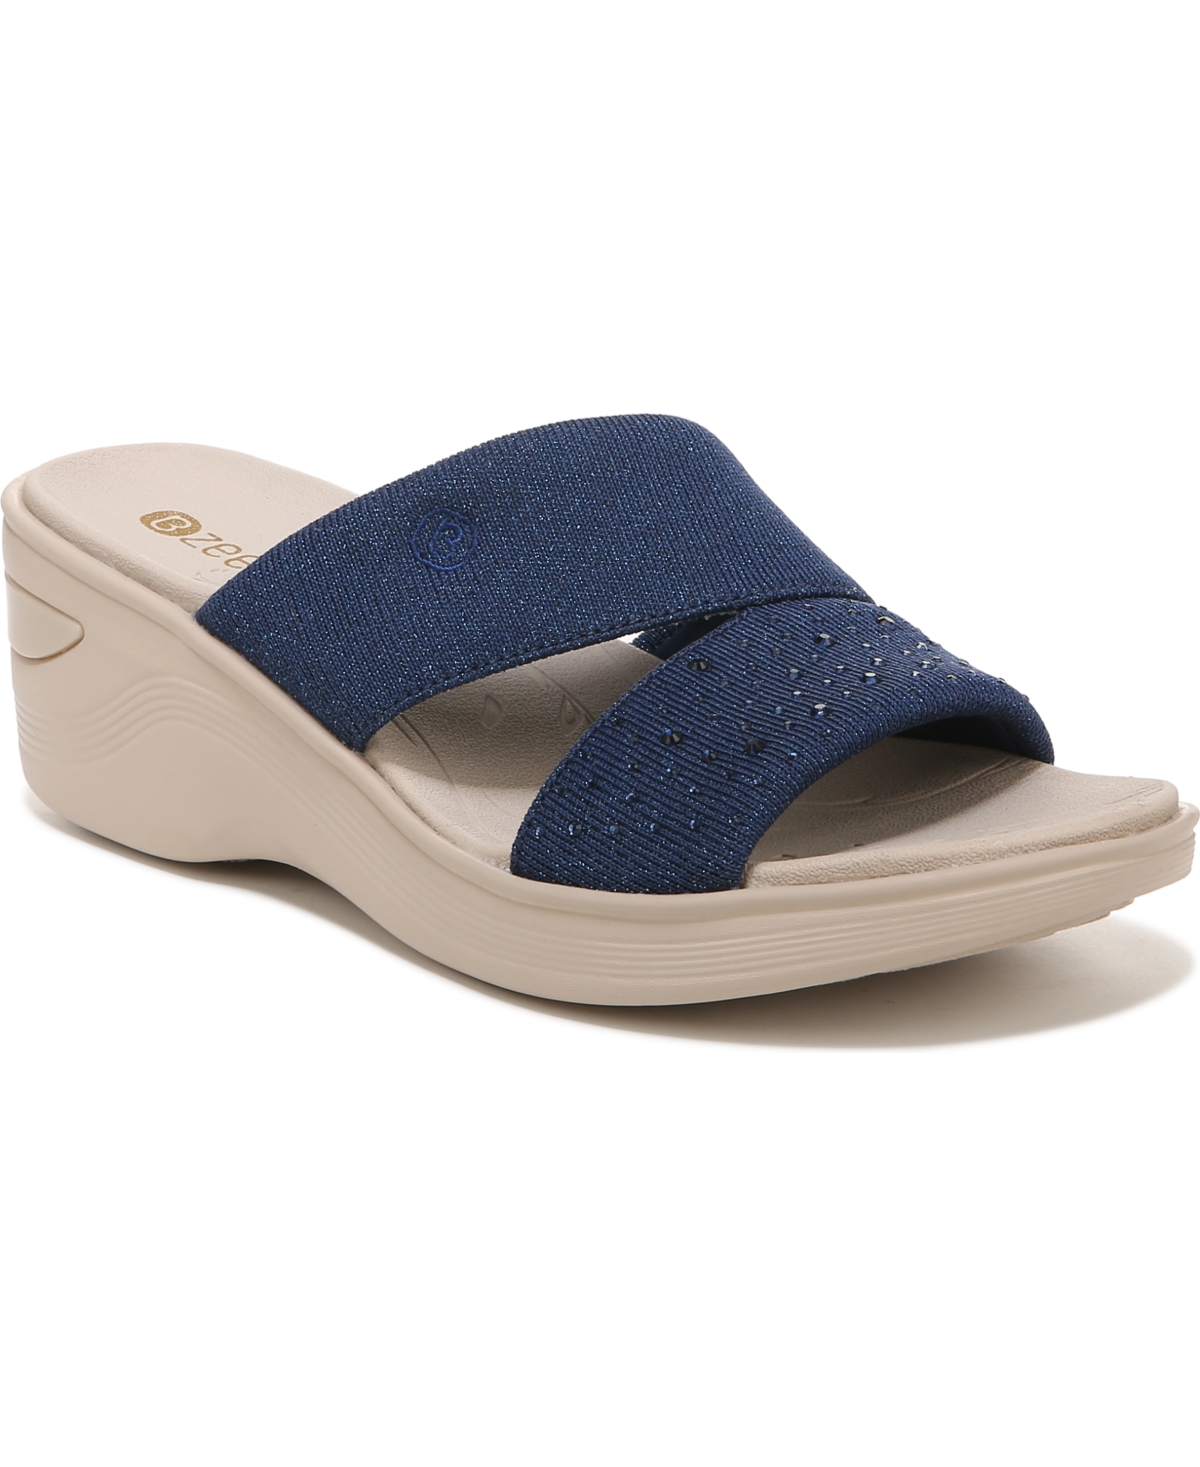 BZees Dynasty-Bright Washable Slide Sandals Women's Shoes